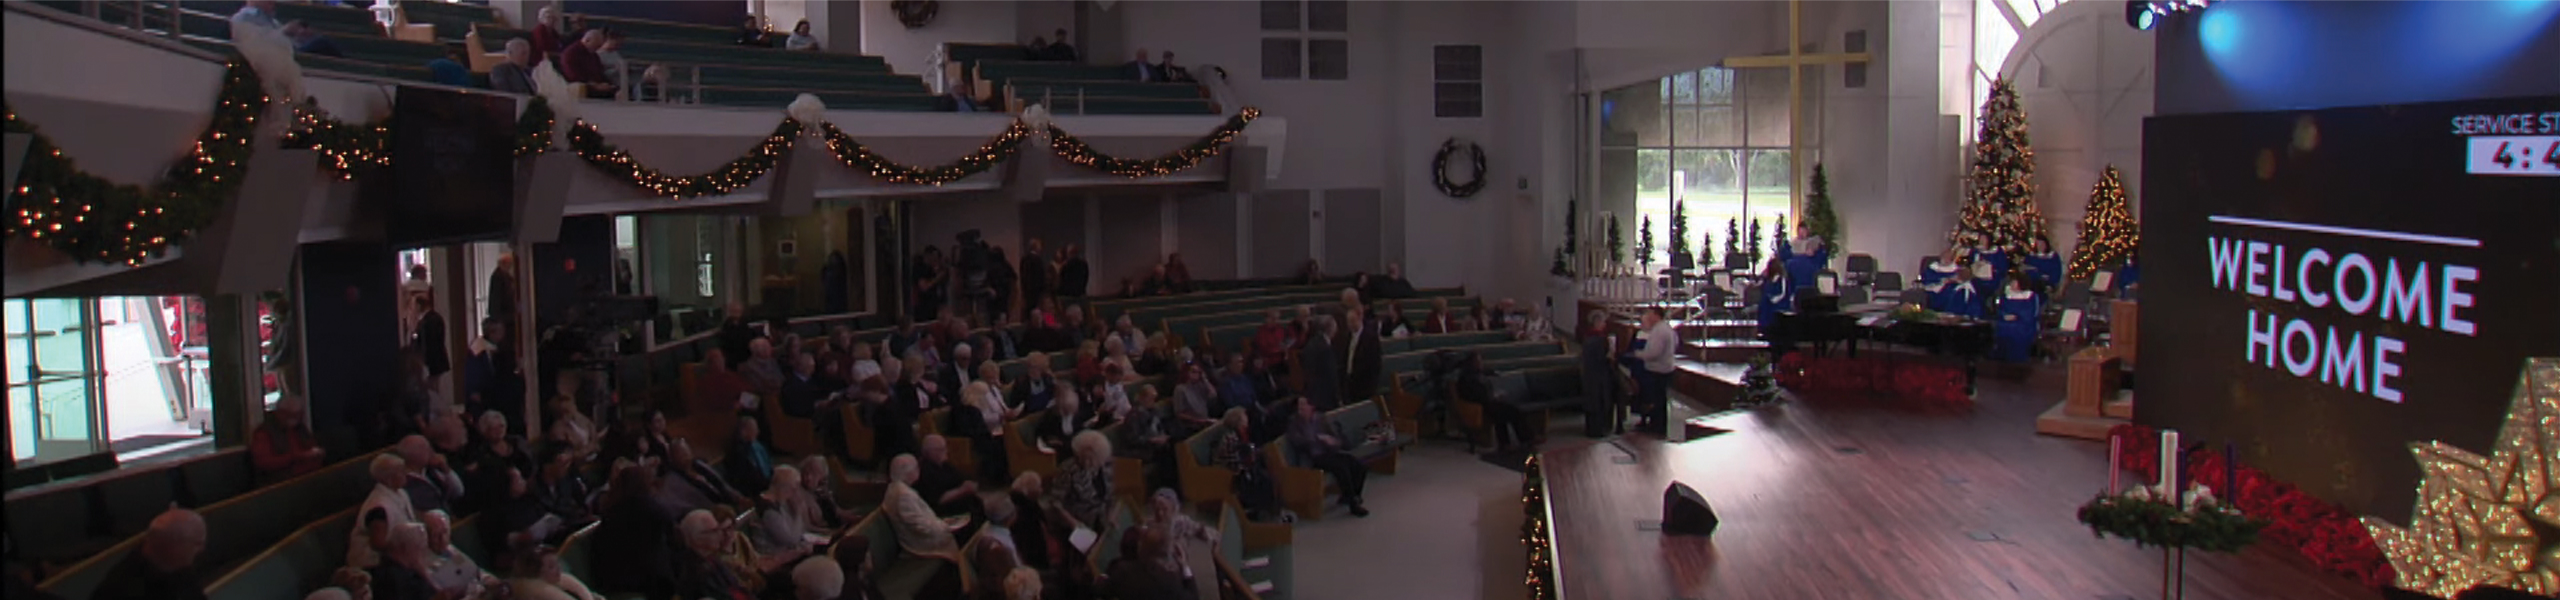 Shepherd's Grove Presbyterian Church Livestreams | Bobby Schuller